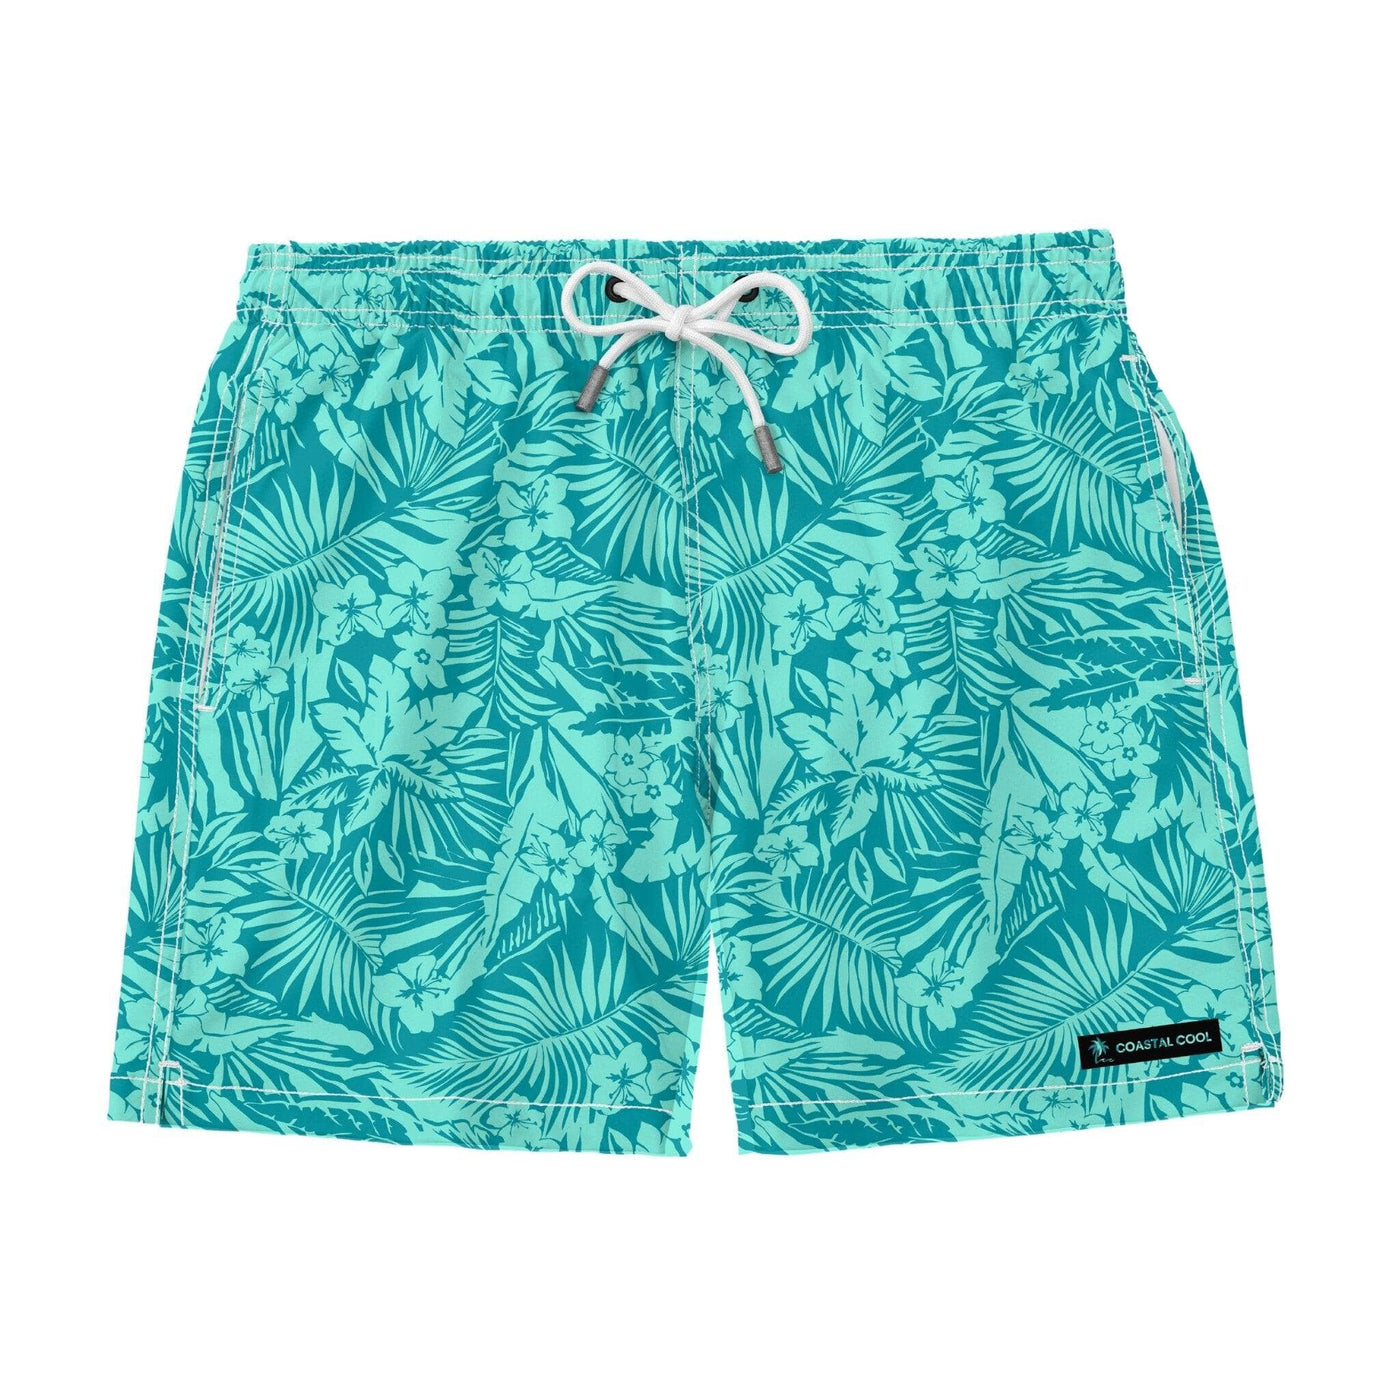 Mahalo Swim Trunks - Coastal Cool - Swimwear and Beachwear - Recycled fabrics